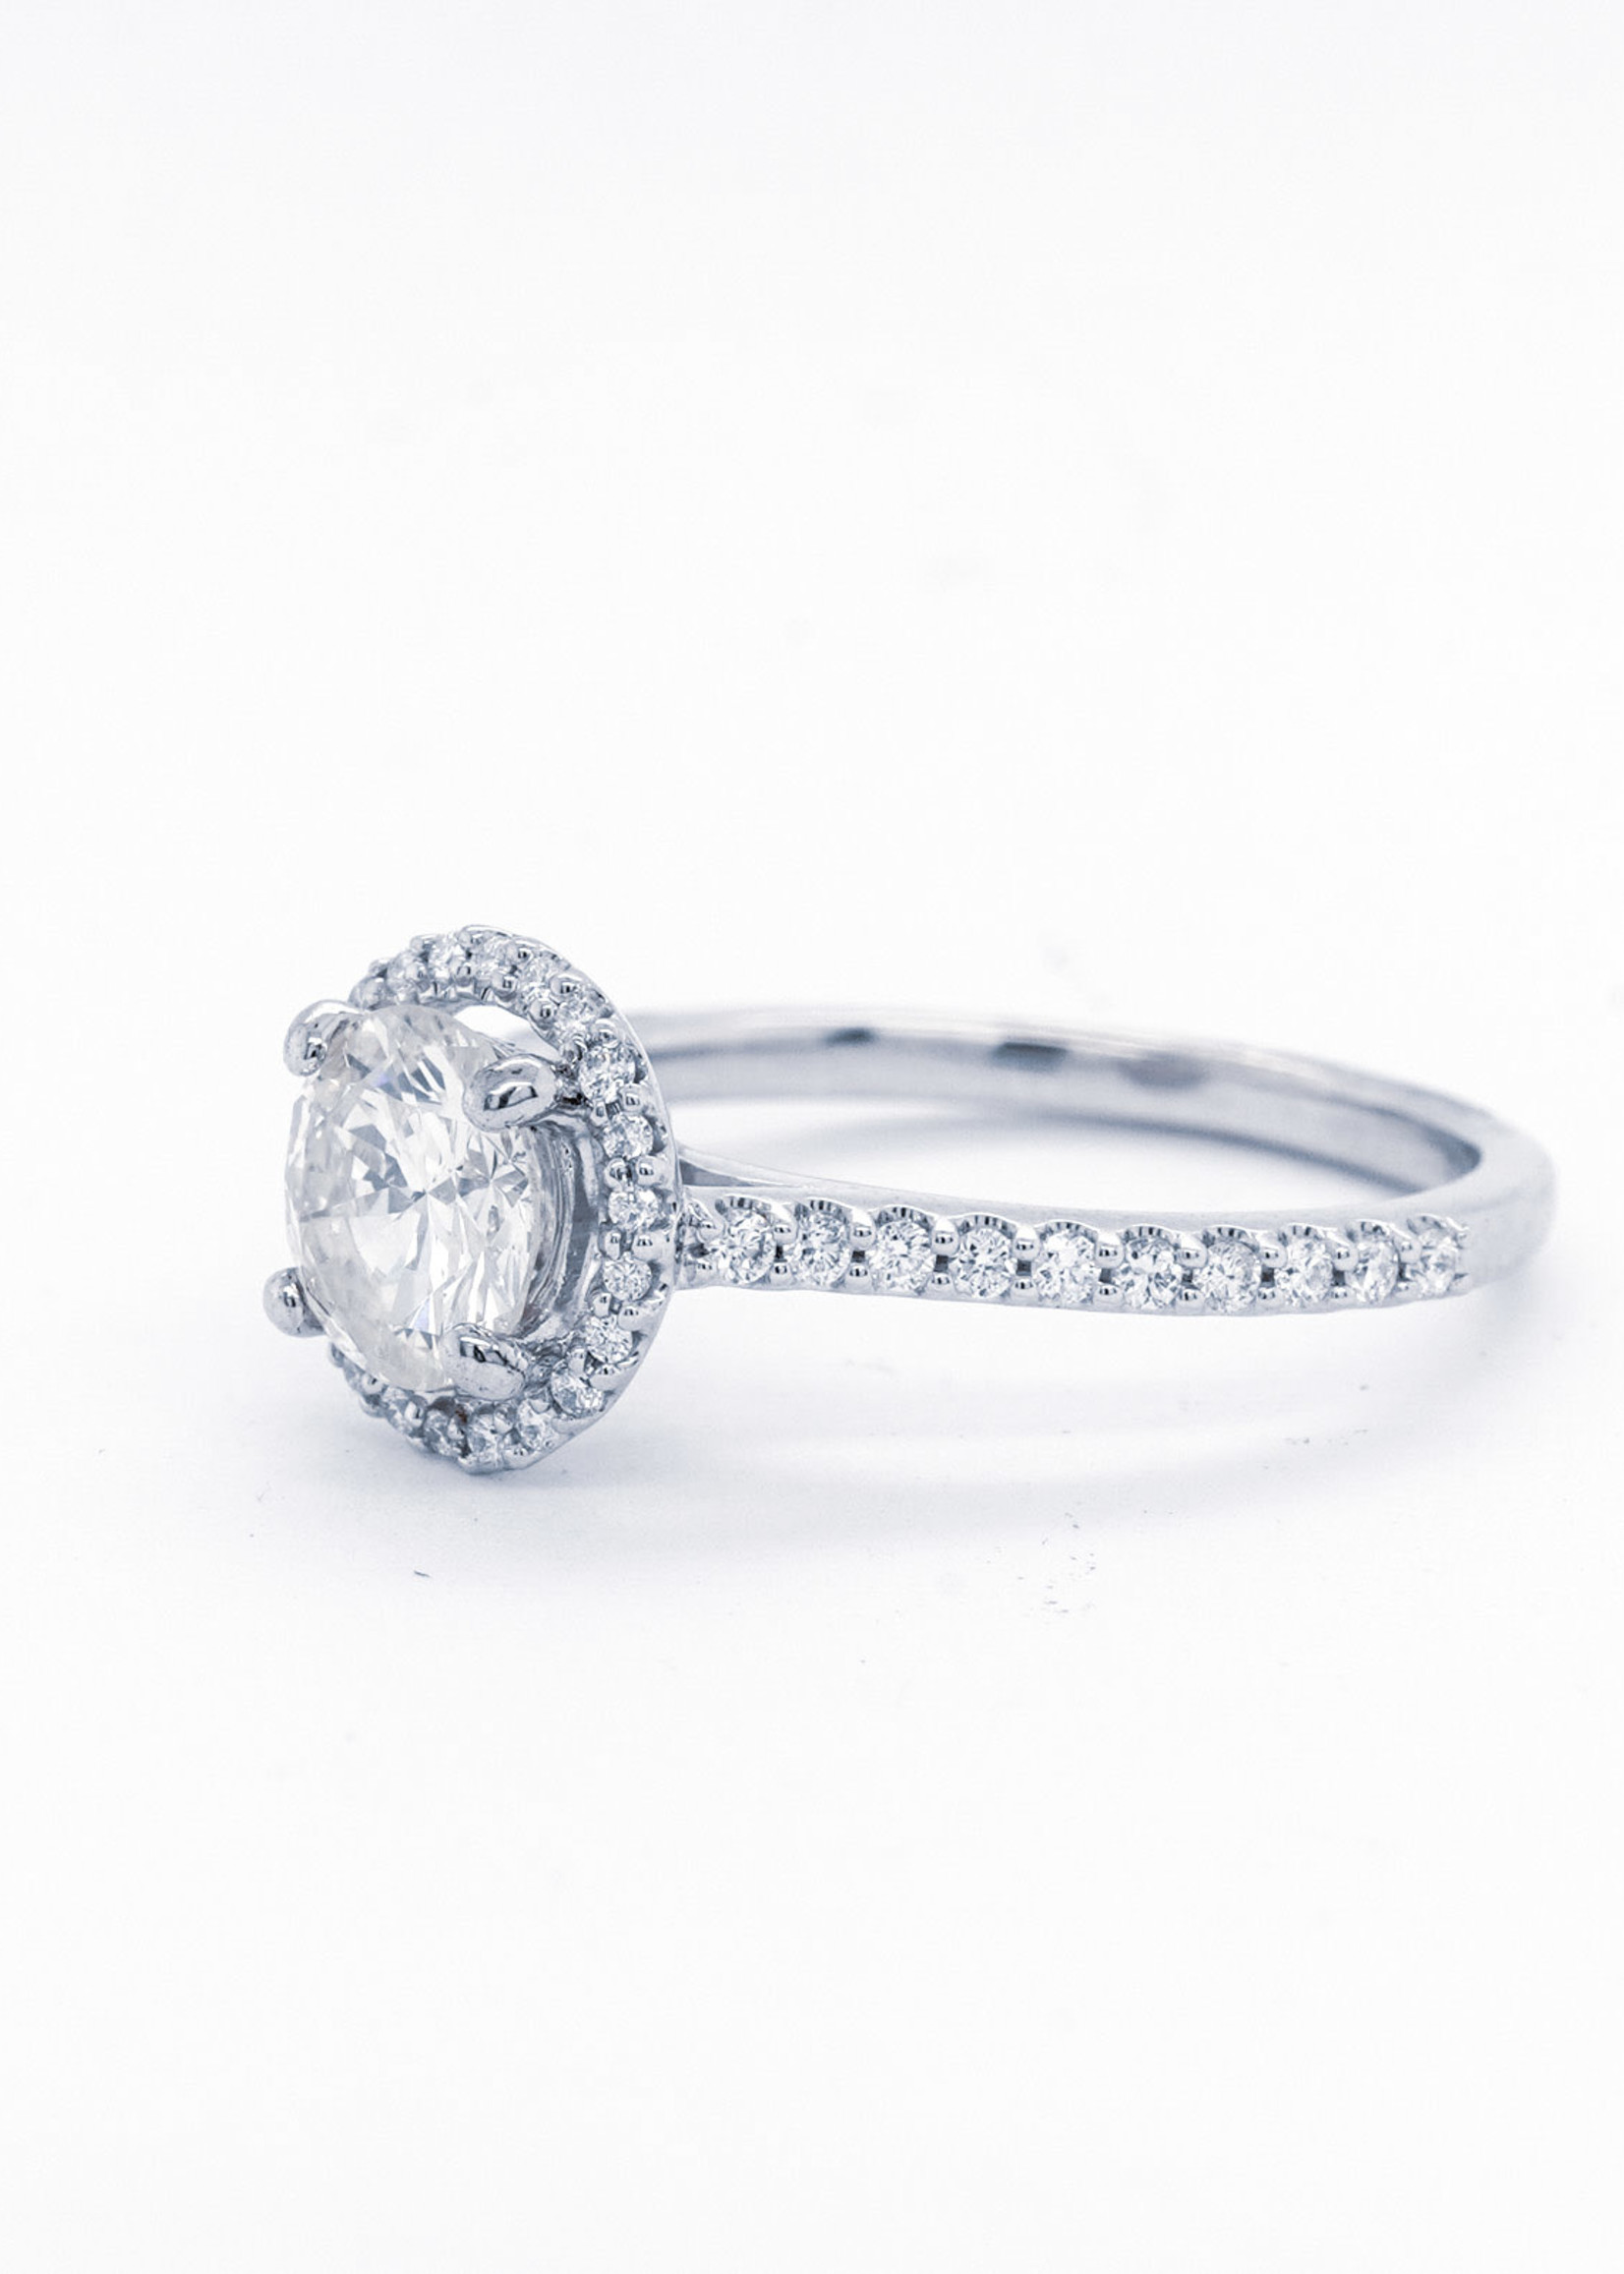 14KW 3.9g 1.71ctw (1.23ctr) JK/I1 Round Diamond Halo Engagement Ring (size 7)